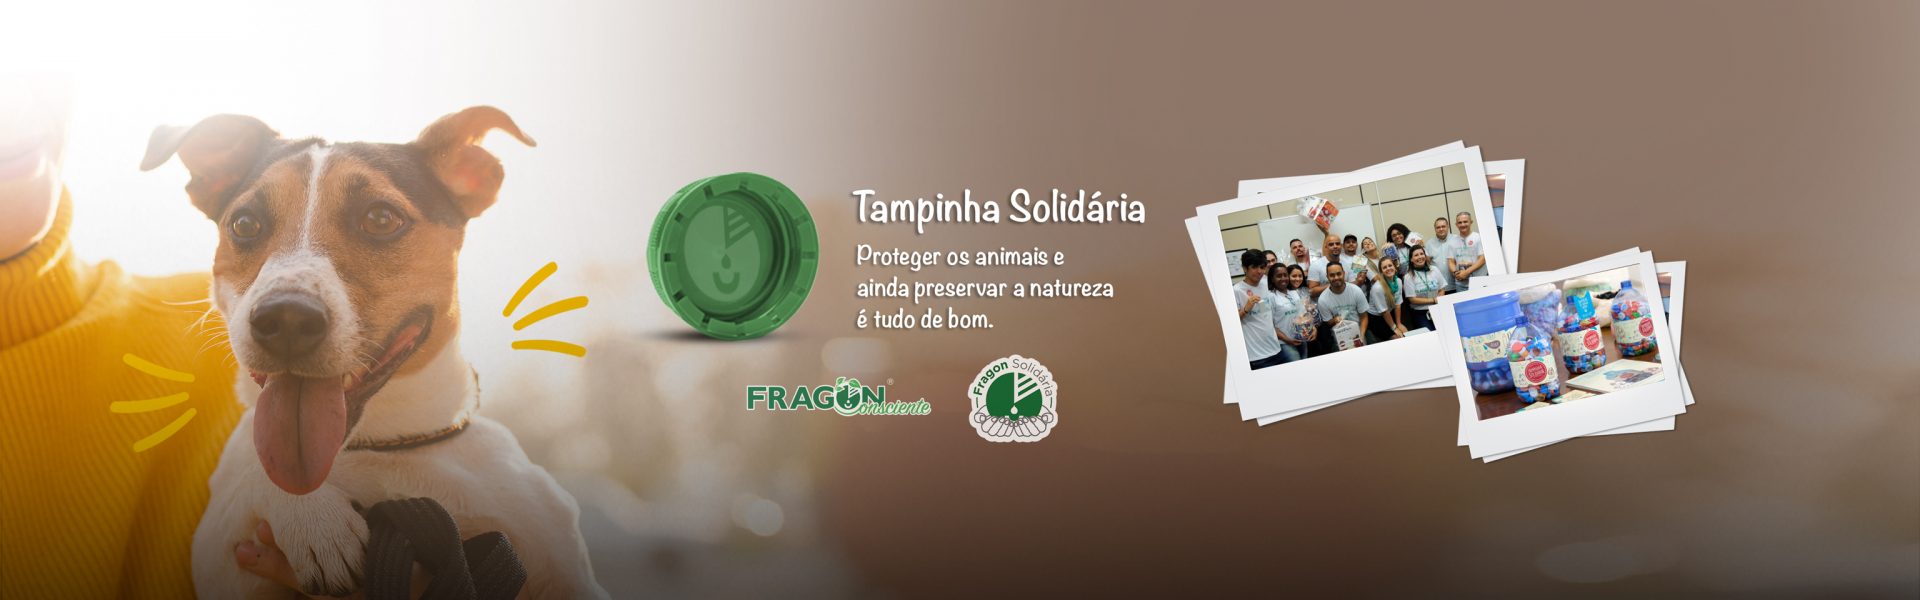 Projeto Tampinha Solidaria.